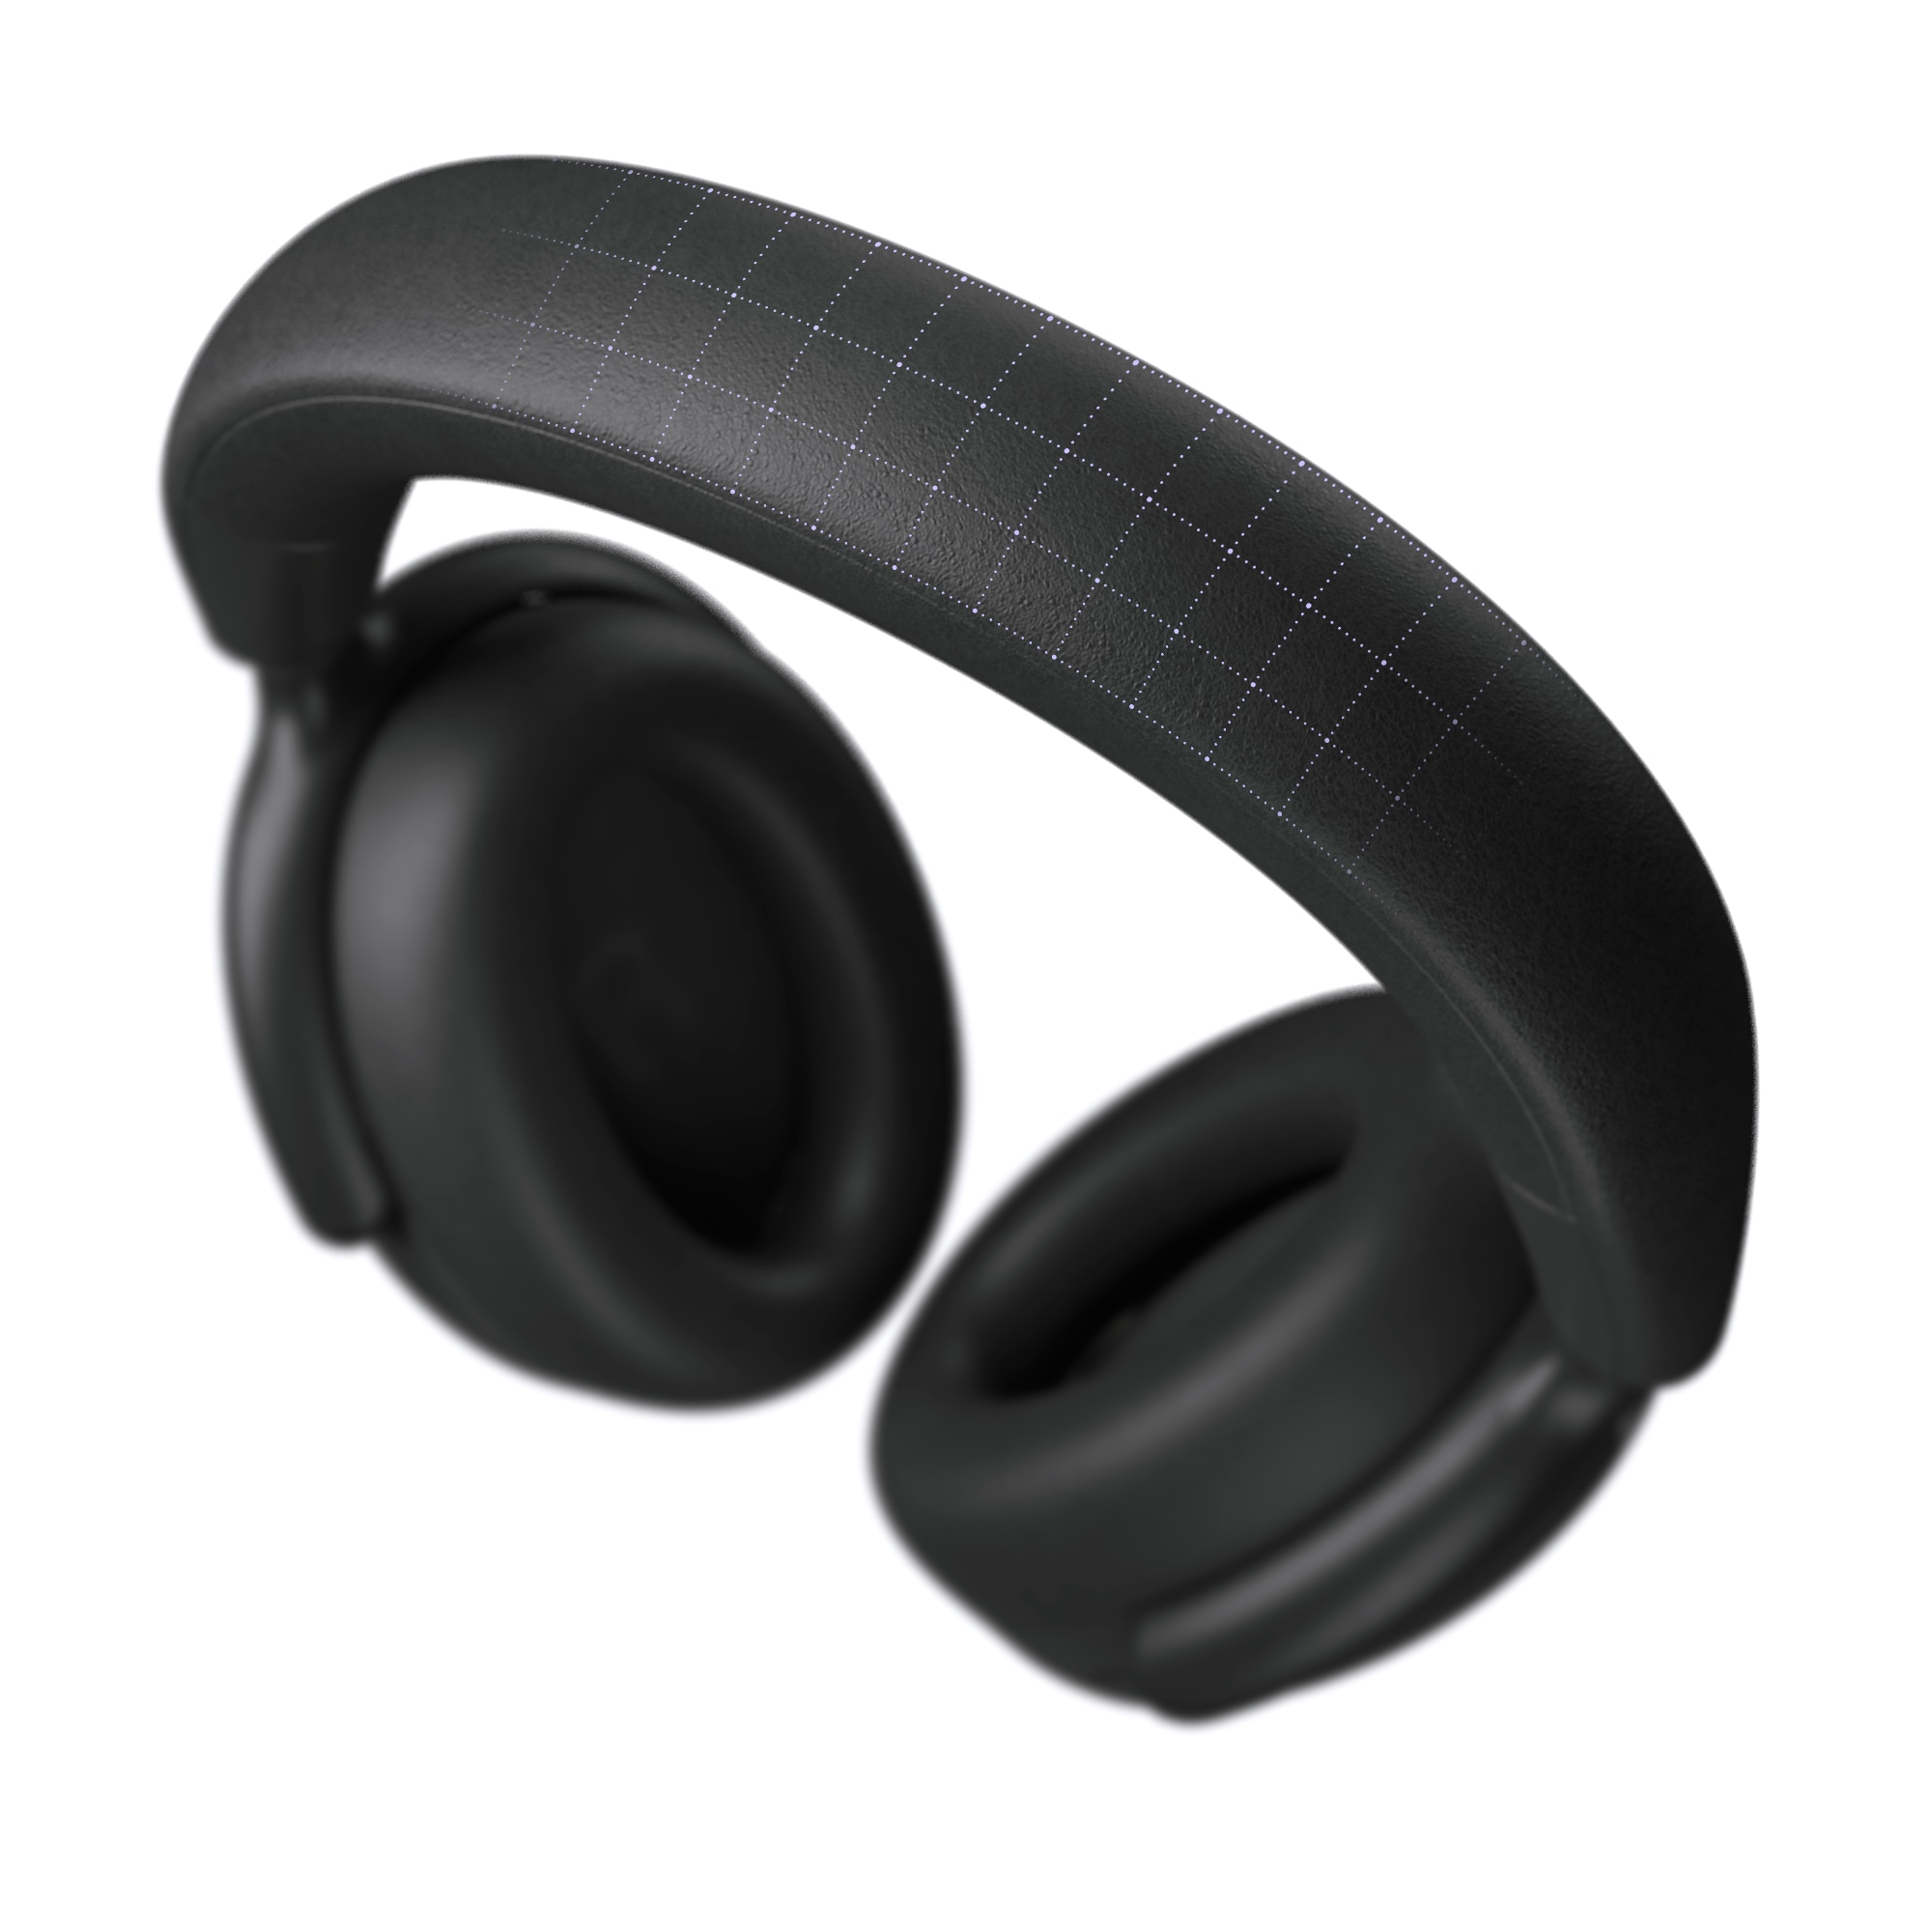 Dell Premier Wireless Headset - Advanced Headband Feature Video